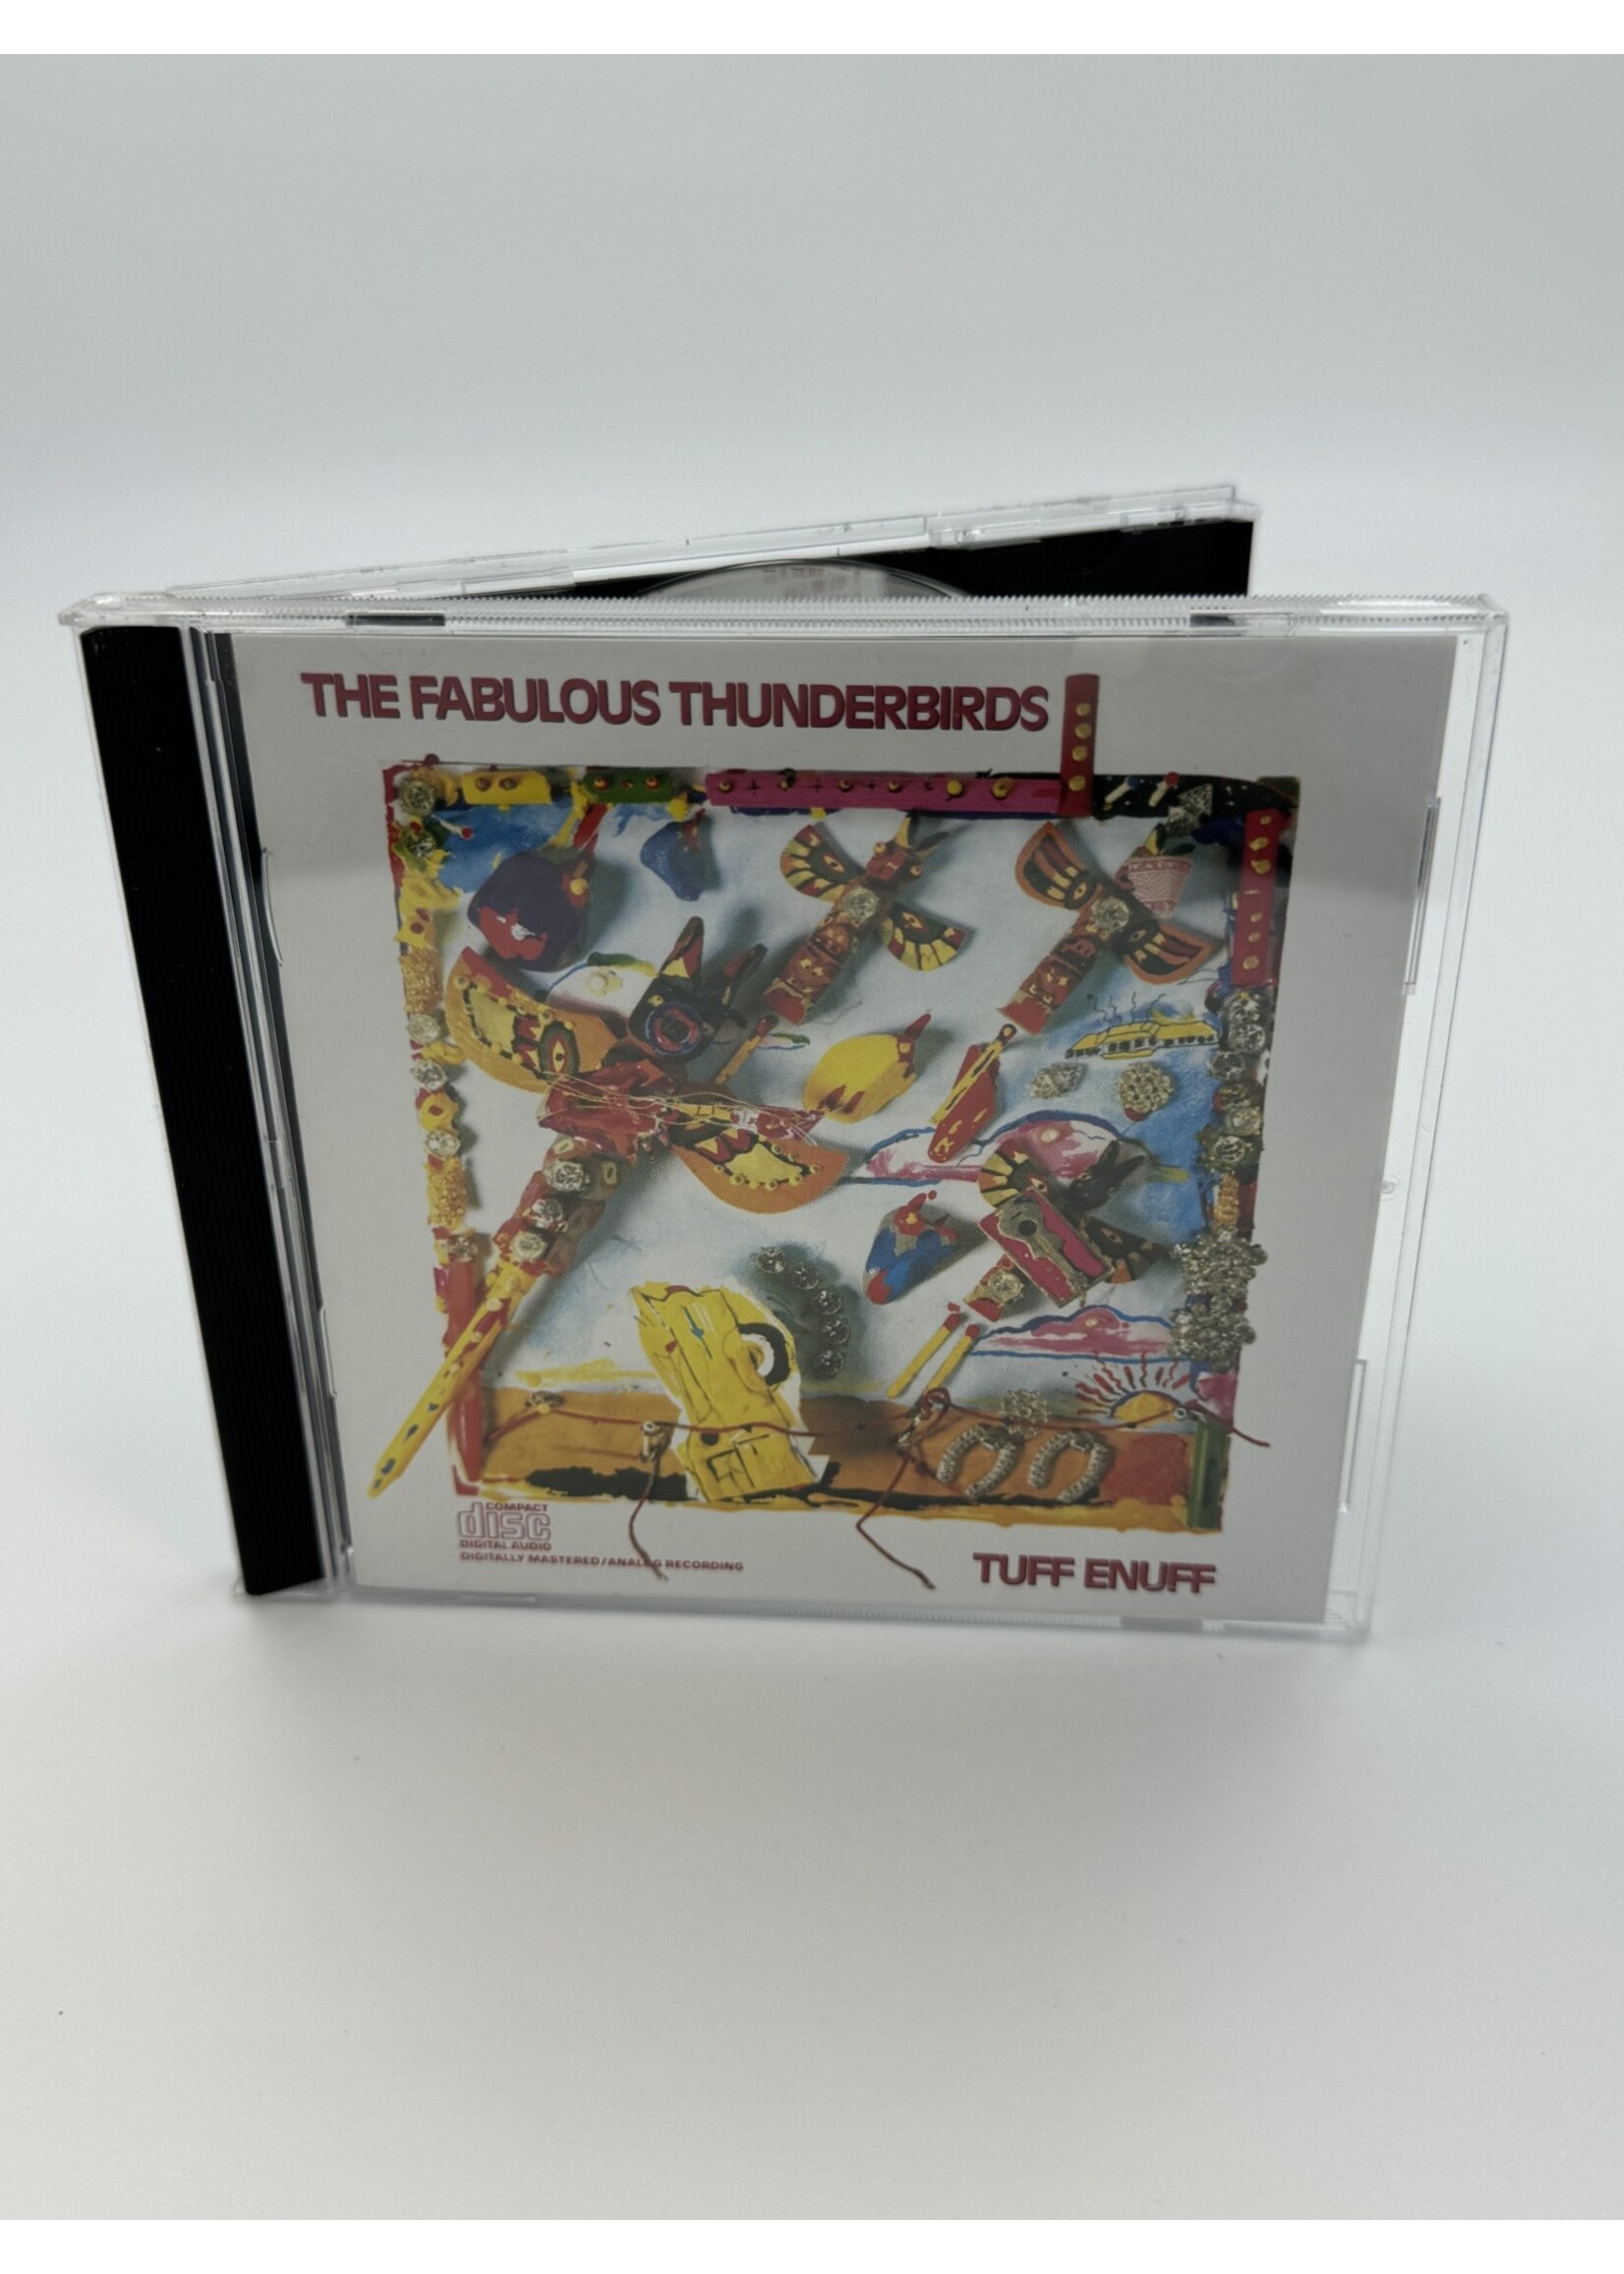 CD The Fabulous Thunderbirds Tuff Enuff CD